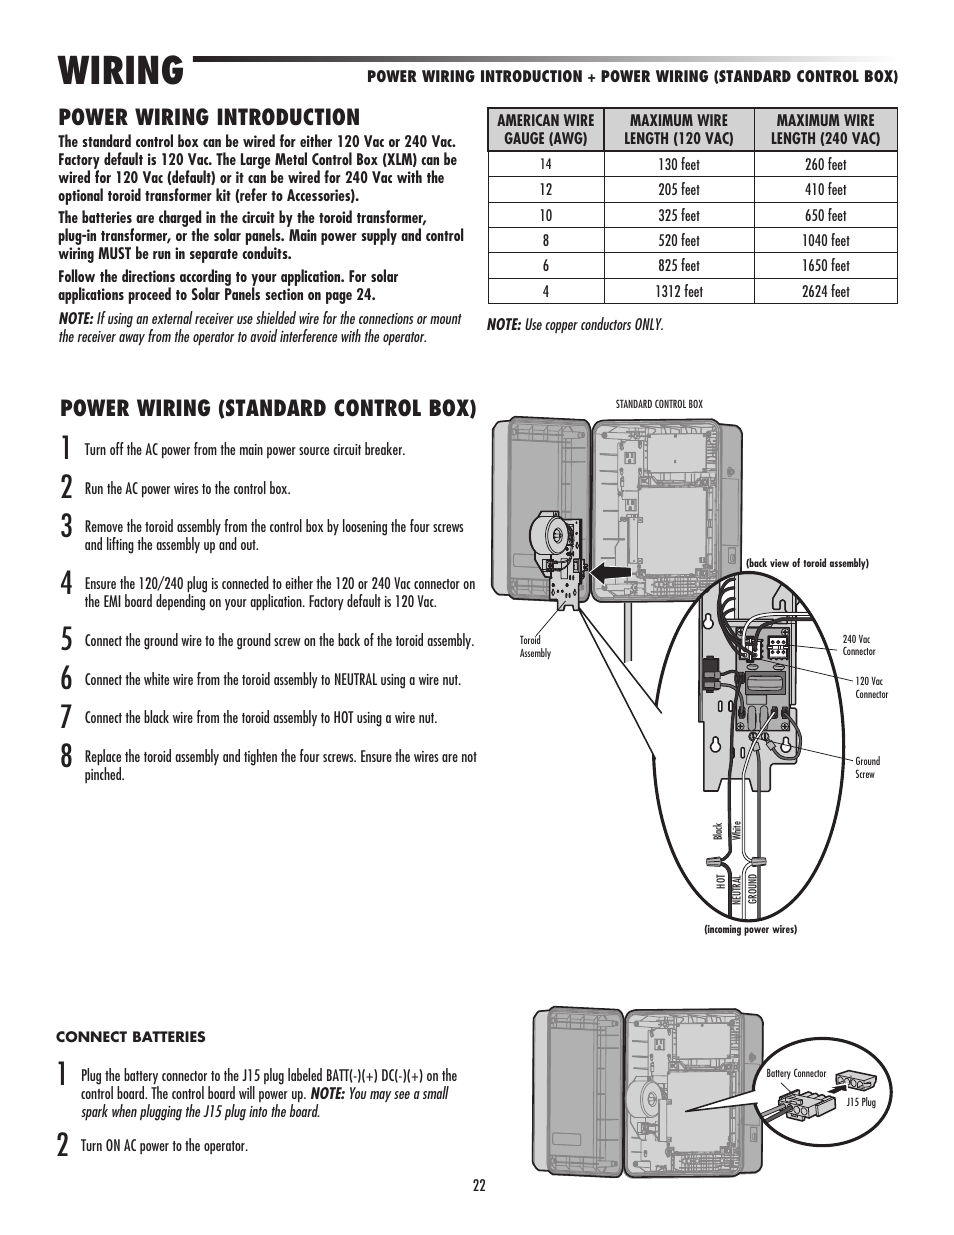 Power wiring introduction, Power wiring (standard control box), Wiring